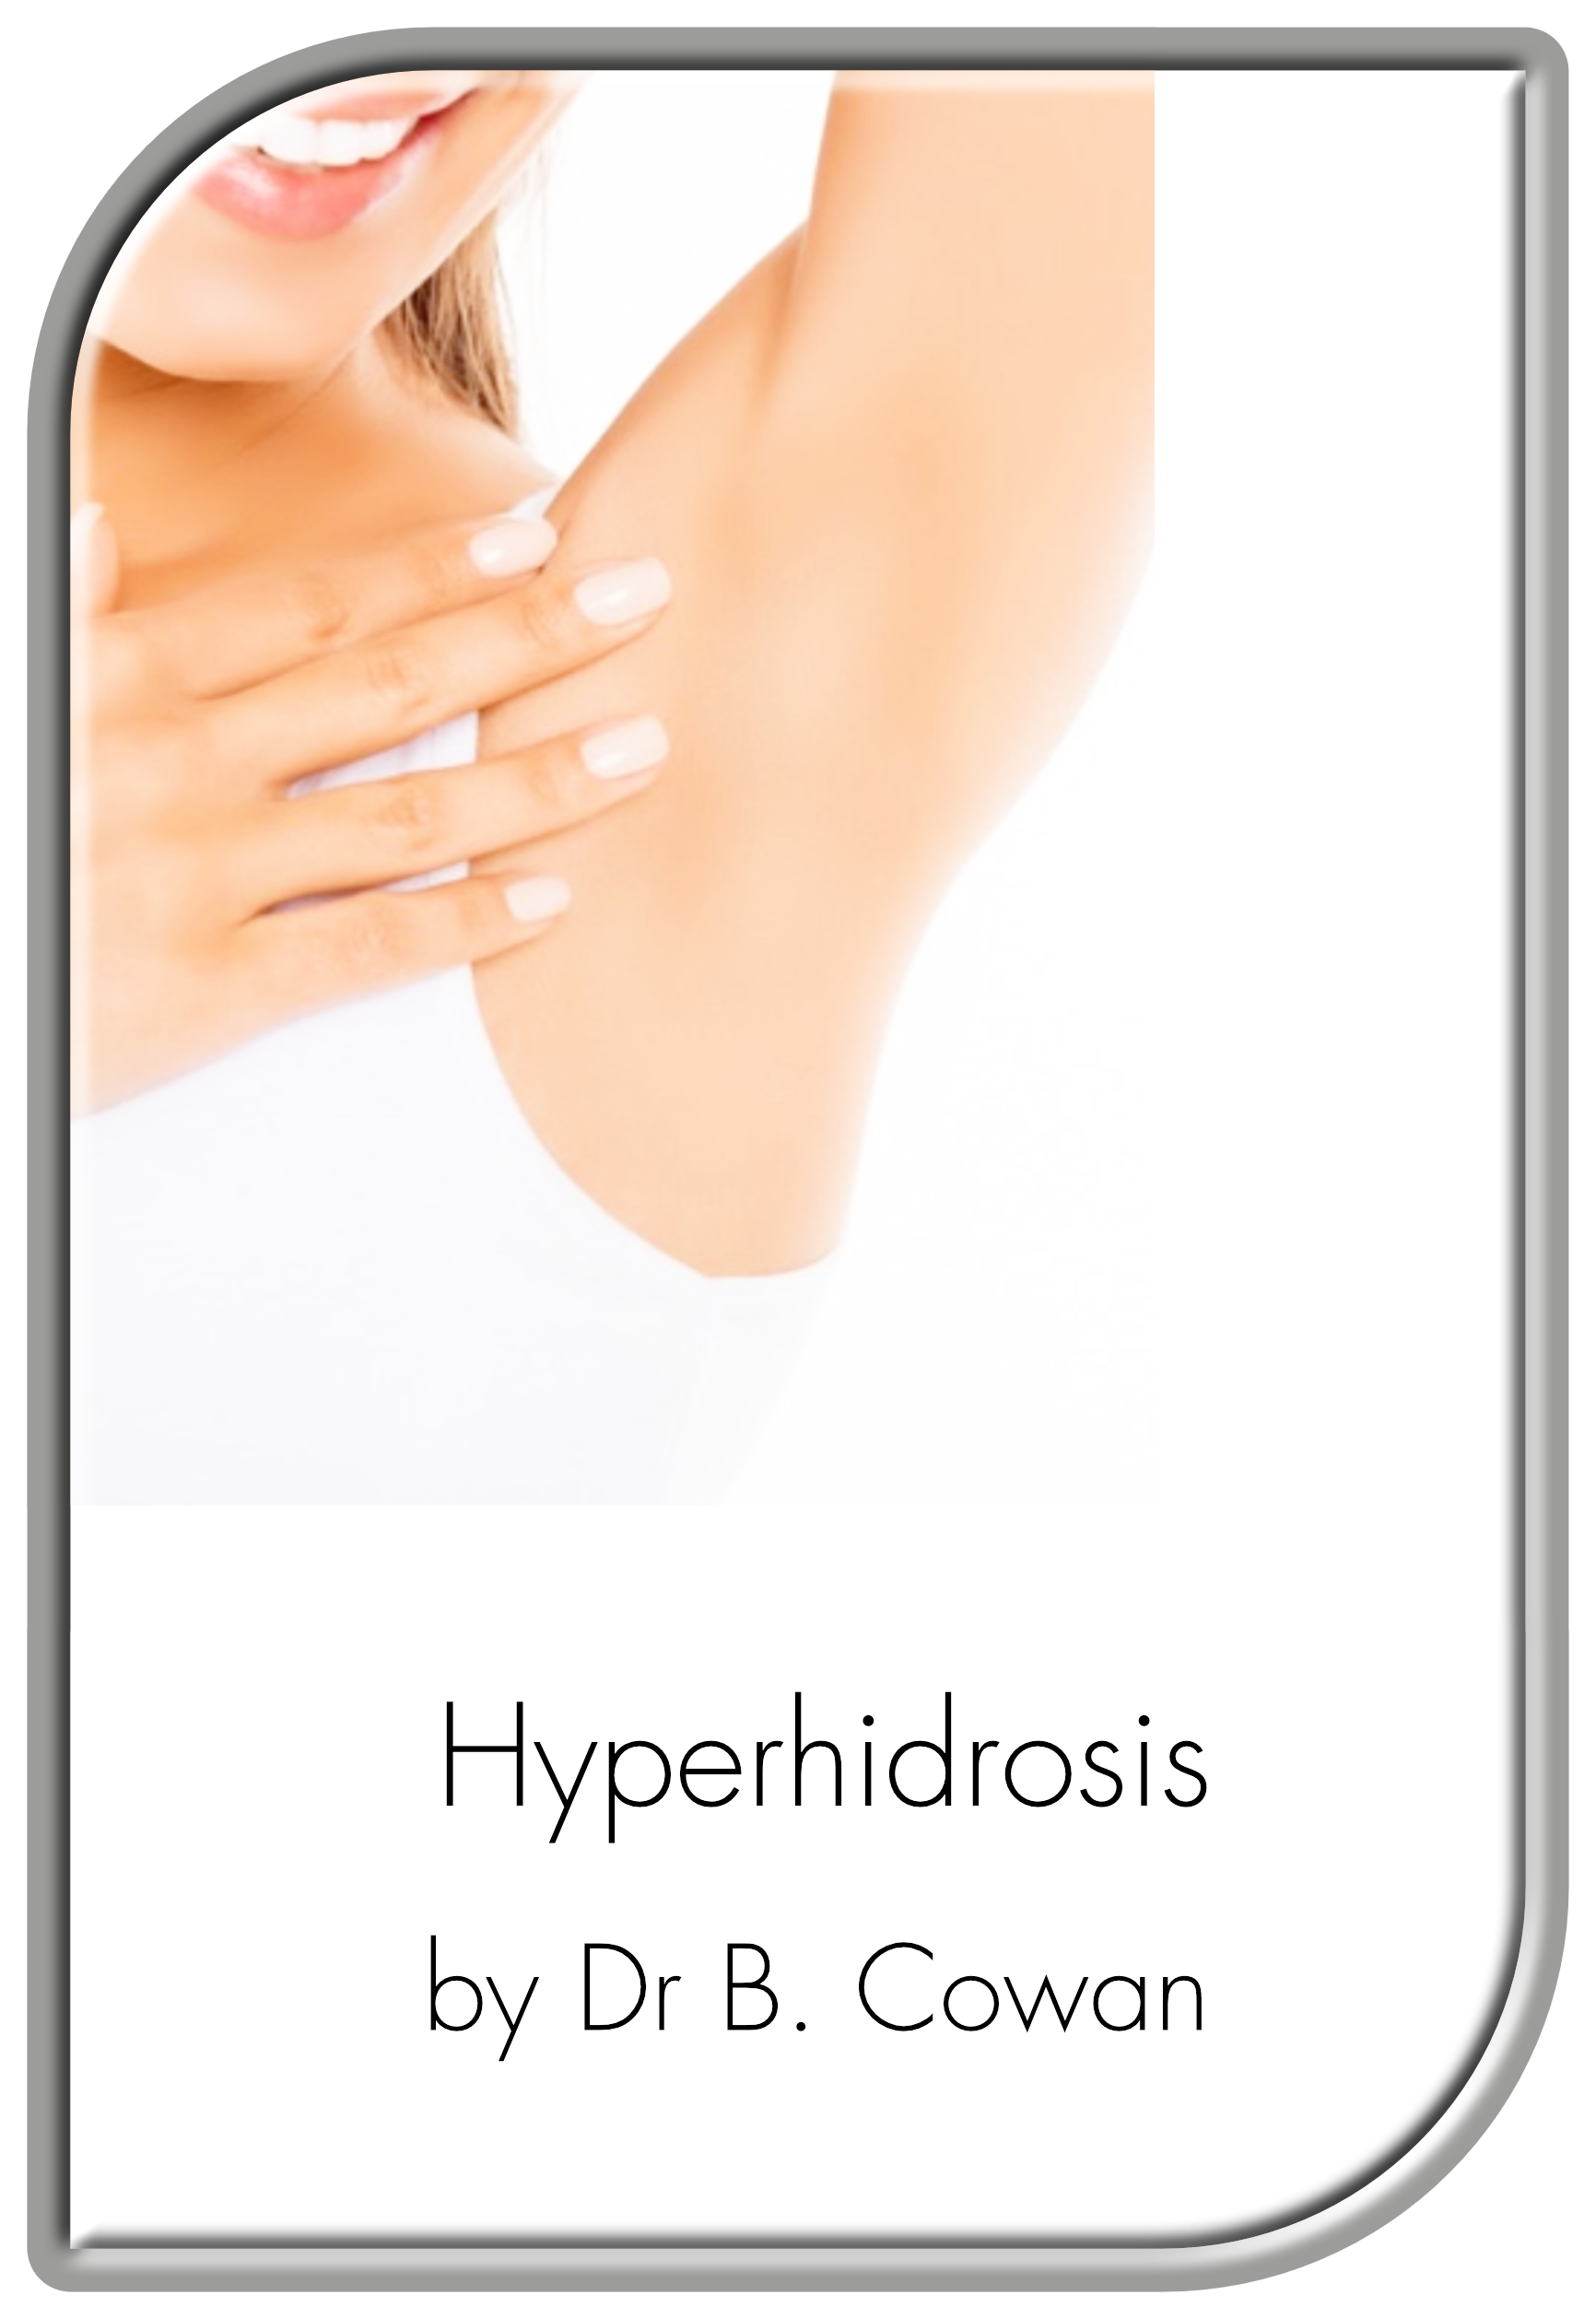 Hyperhidrosis Treatment